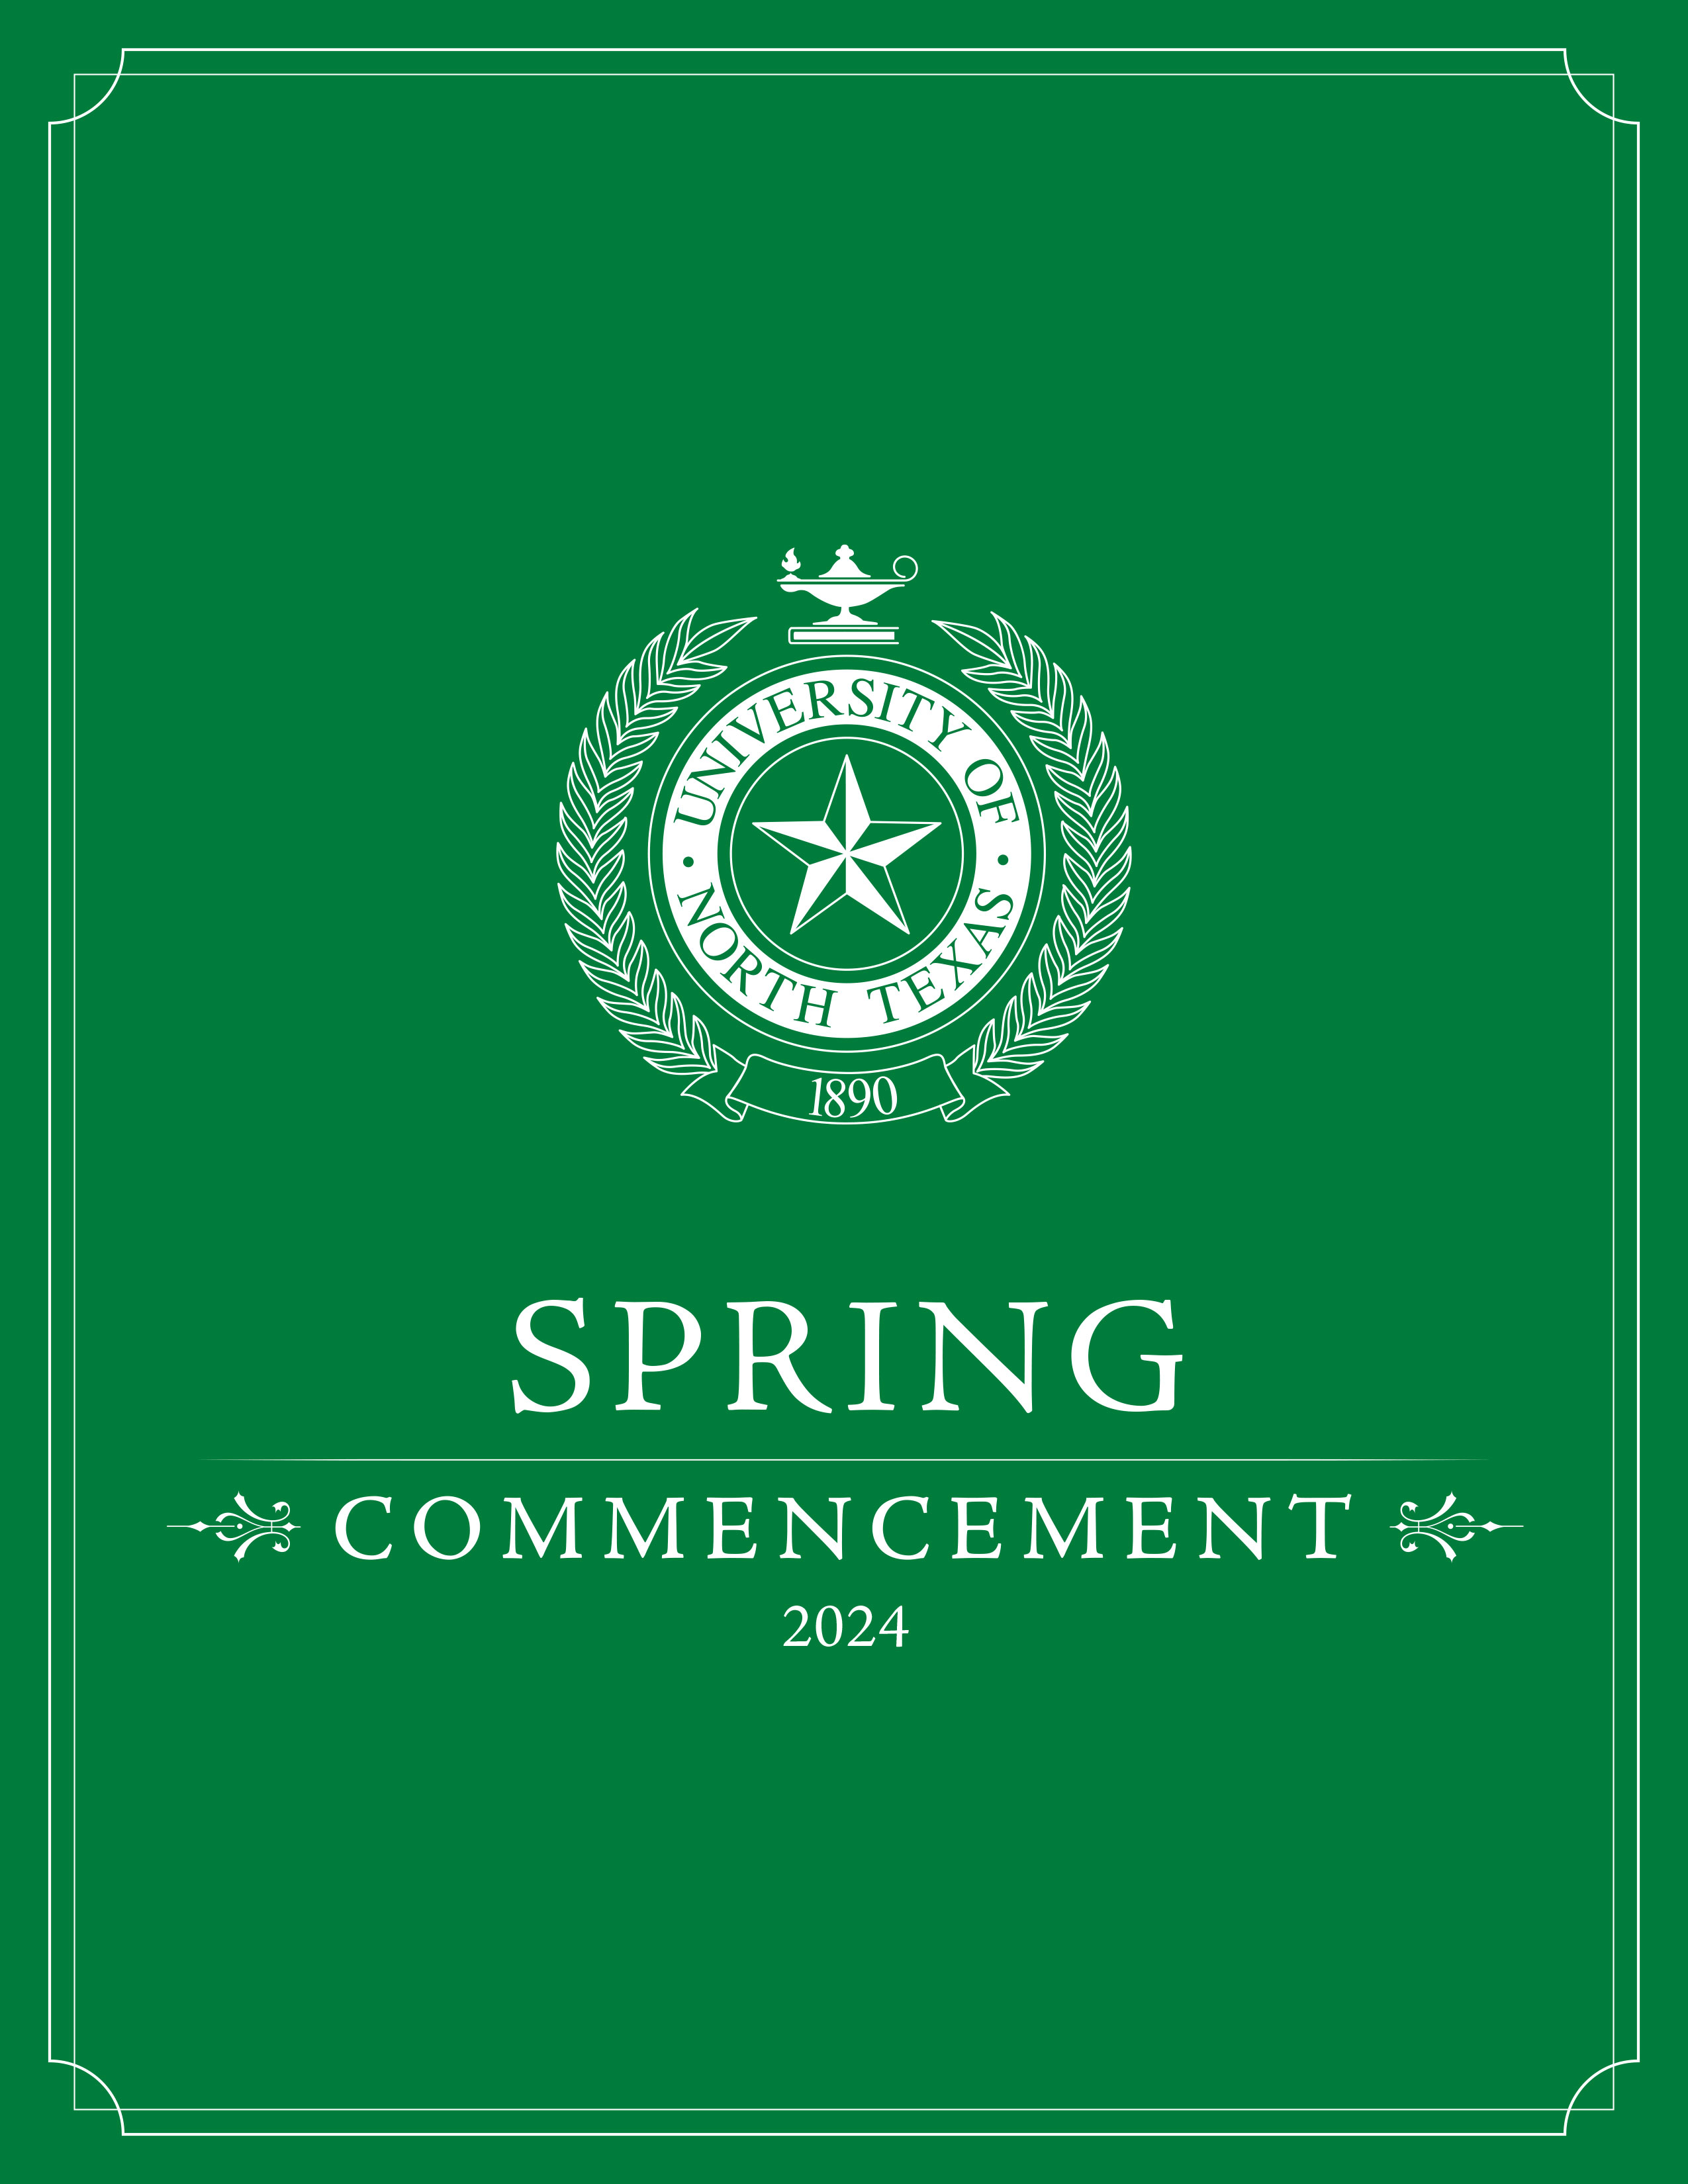 Spring 2024 Commencement program cover